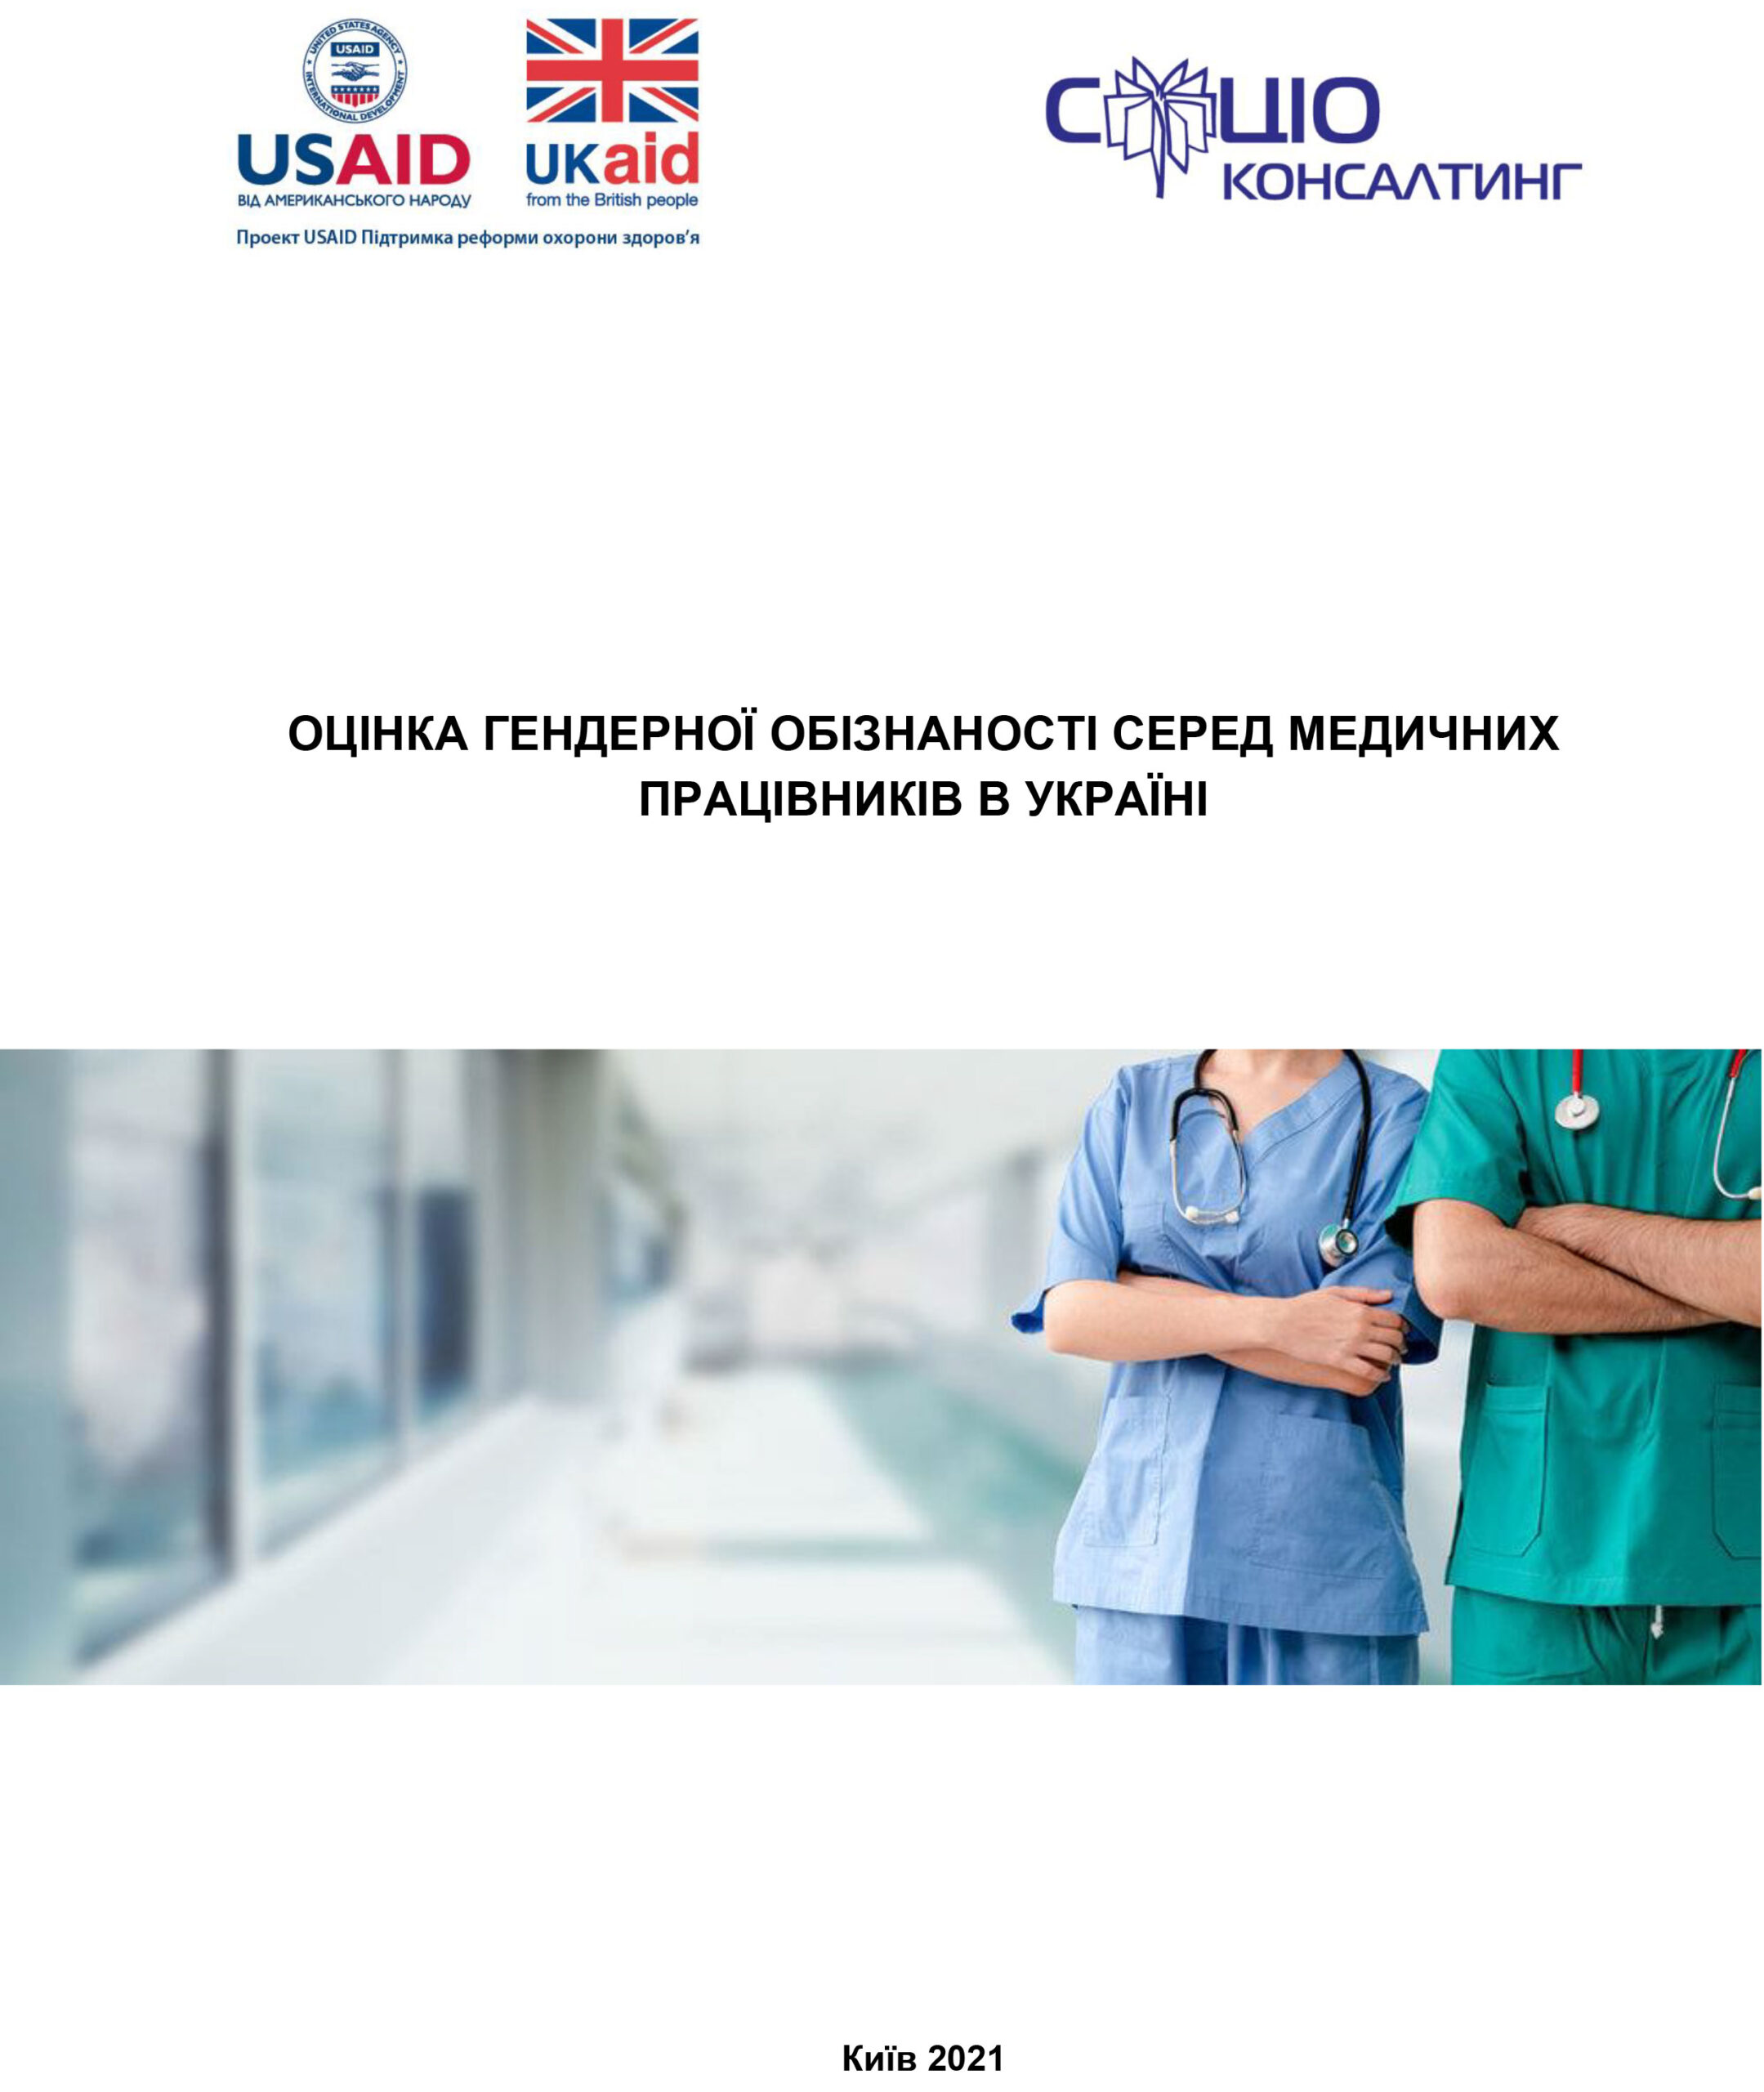 Assessment of gender awareness among healthcare professionals in Ukraine